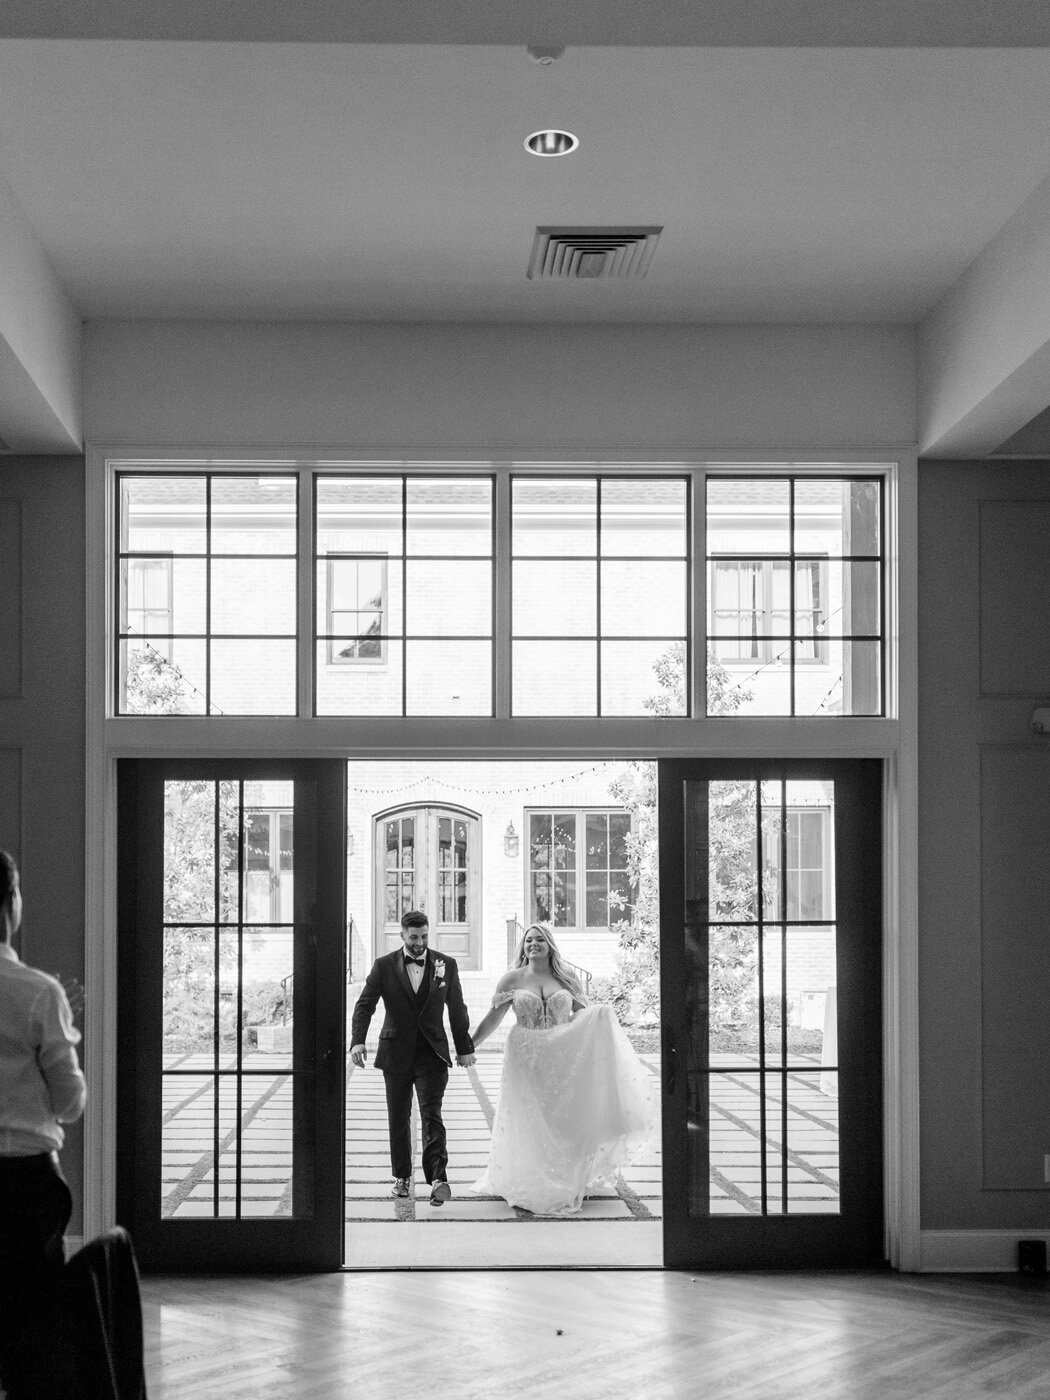 The Bradford Wedding NC | Kelsie Elizabeth Photography 65